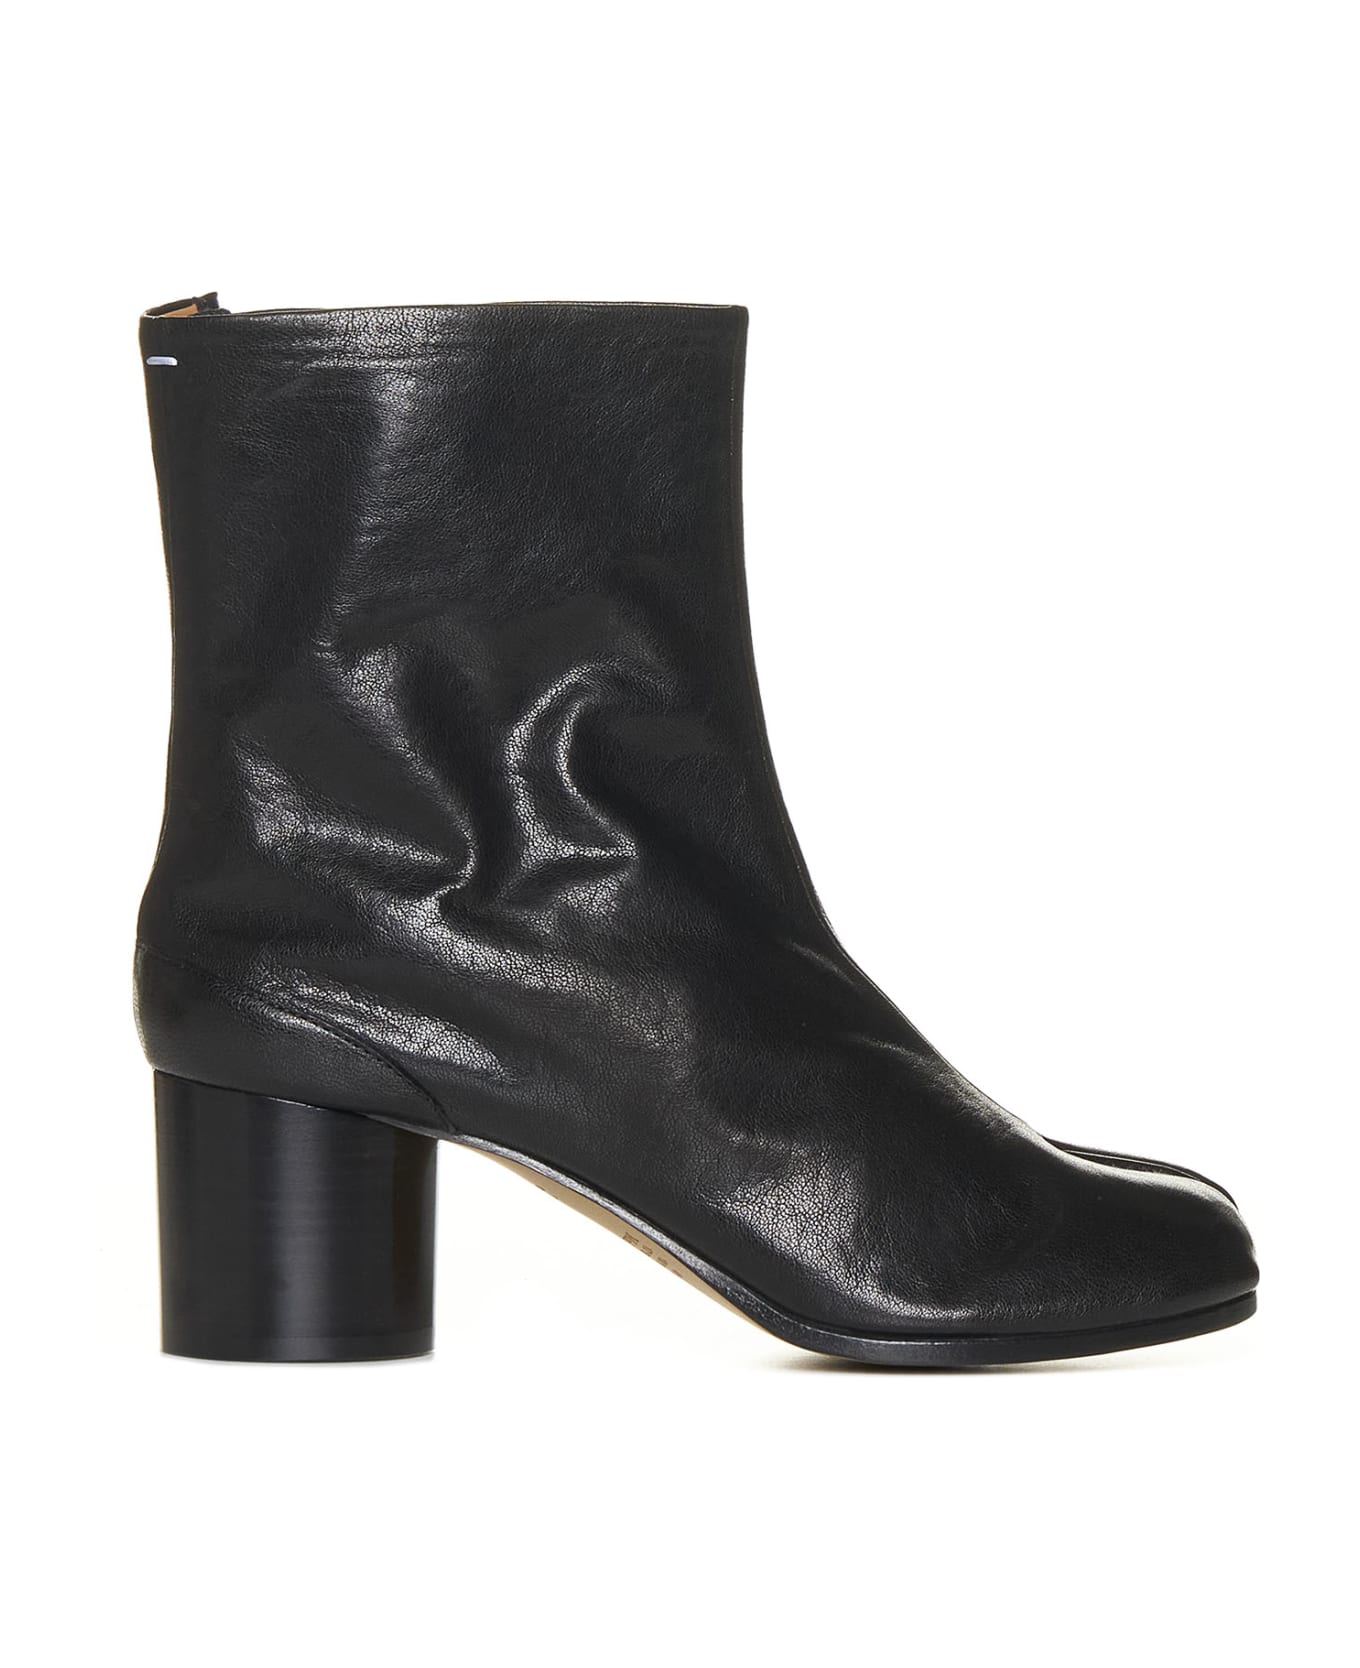 Maison Margiela Tabi Leather Ankle Boots - Black